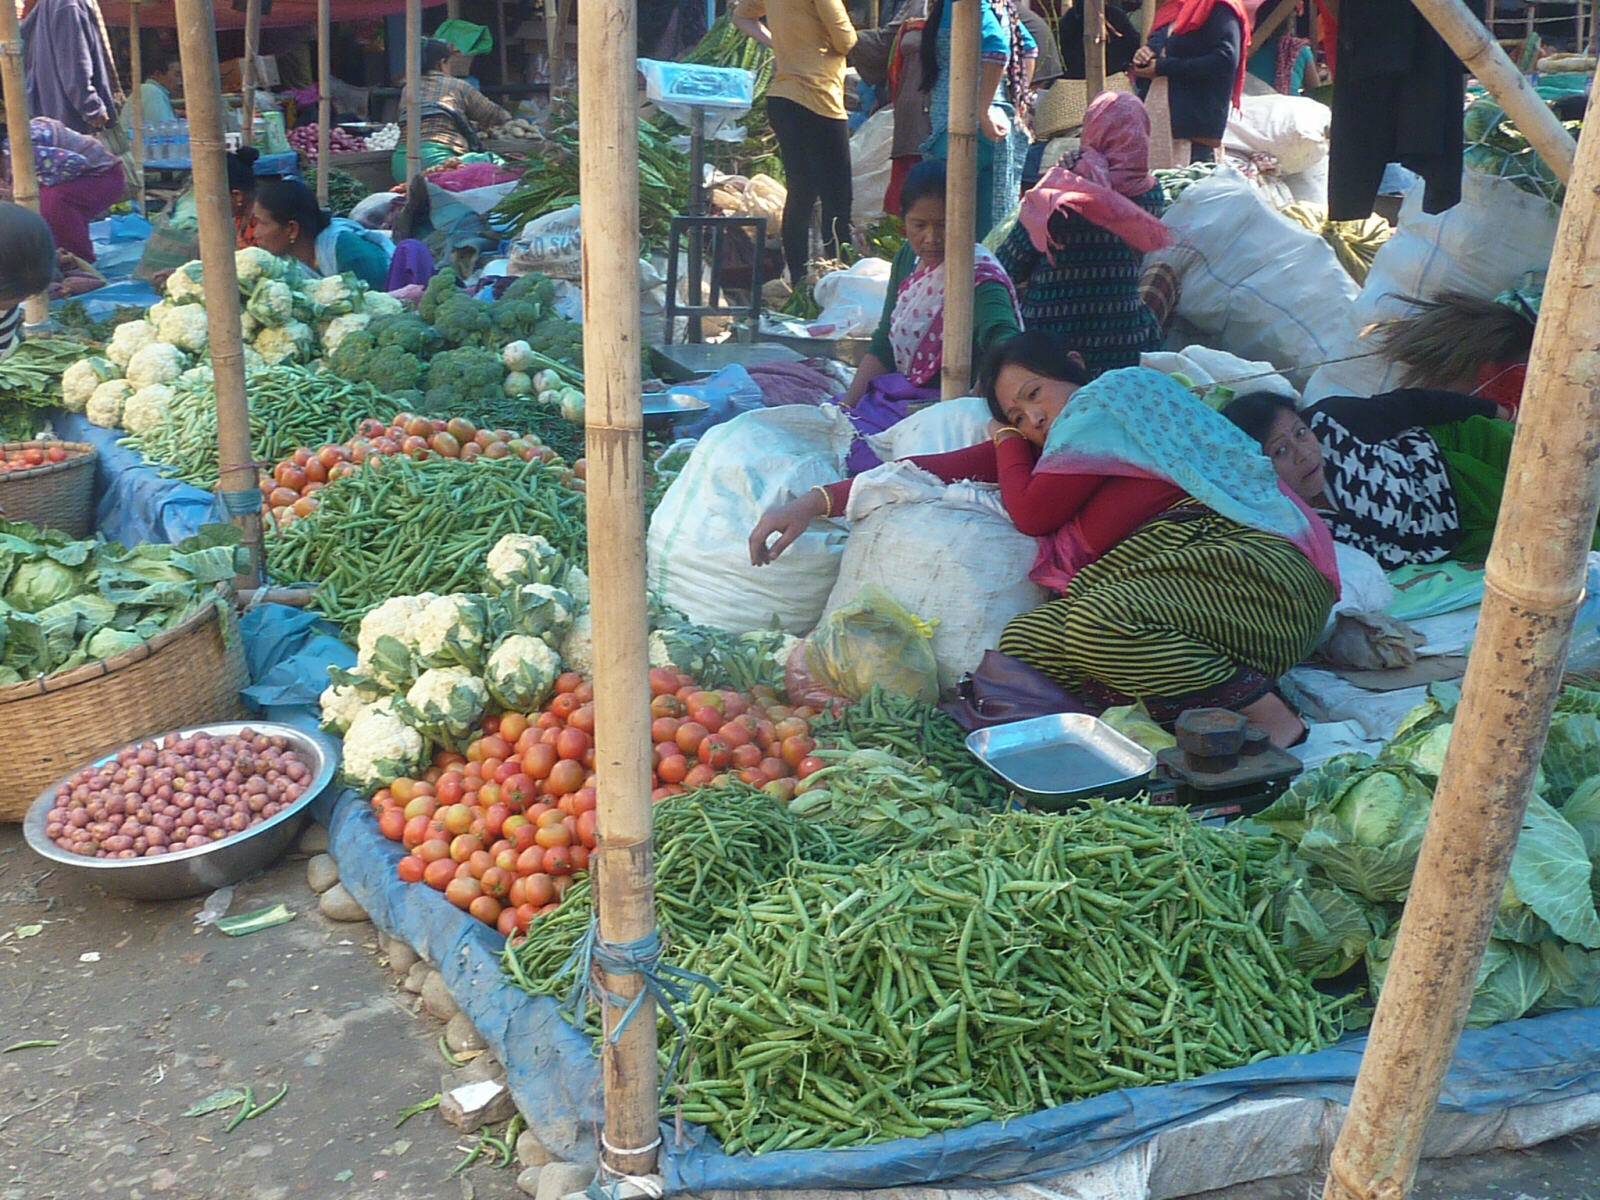 Ima market (Women's market) in Imphal, Manipur state